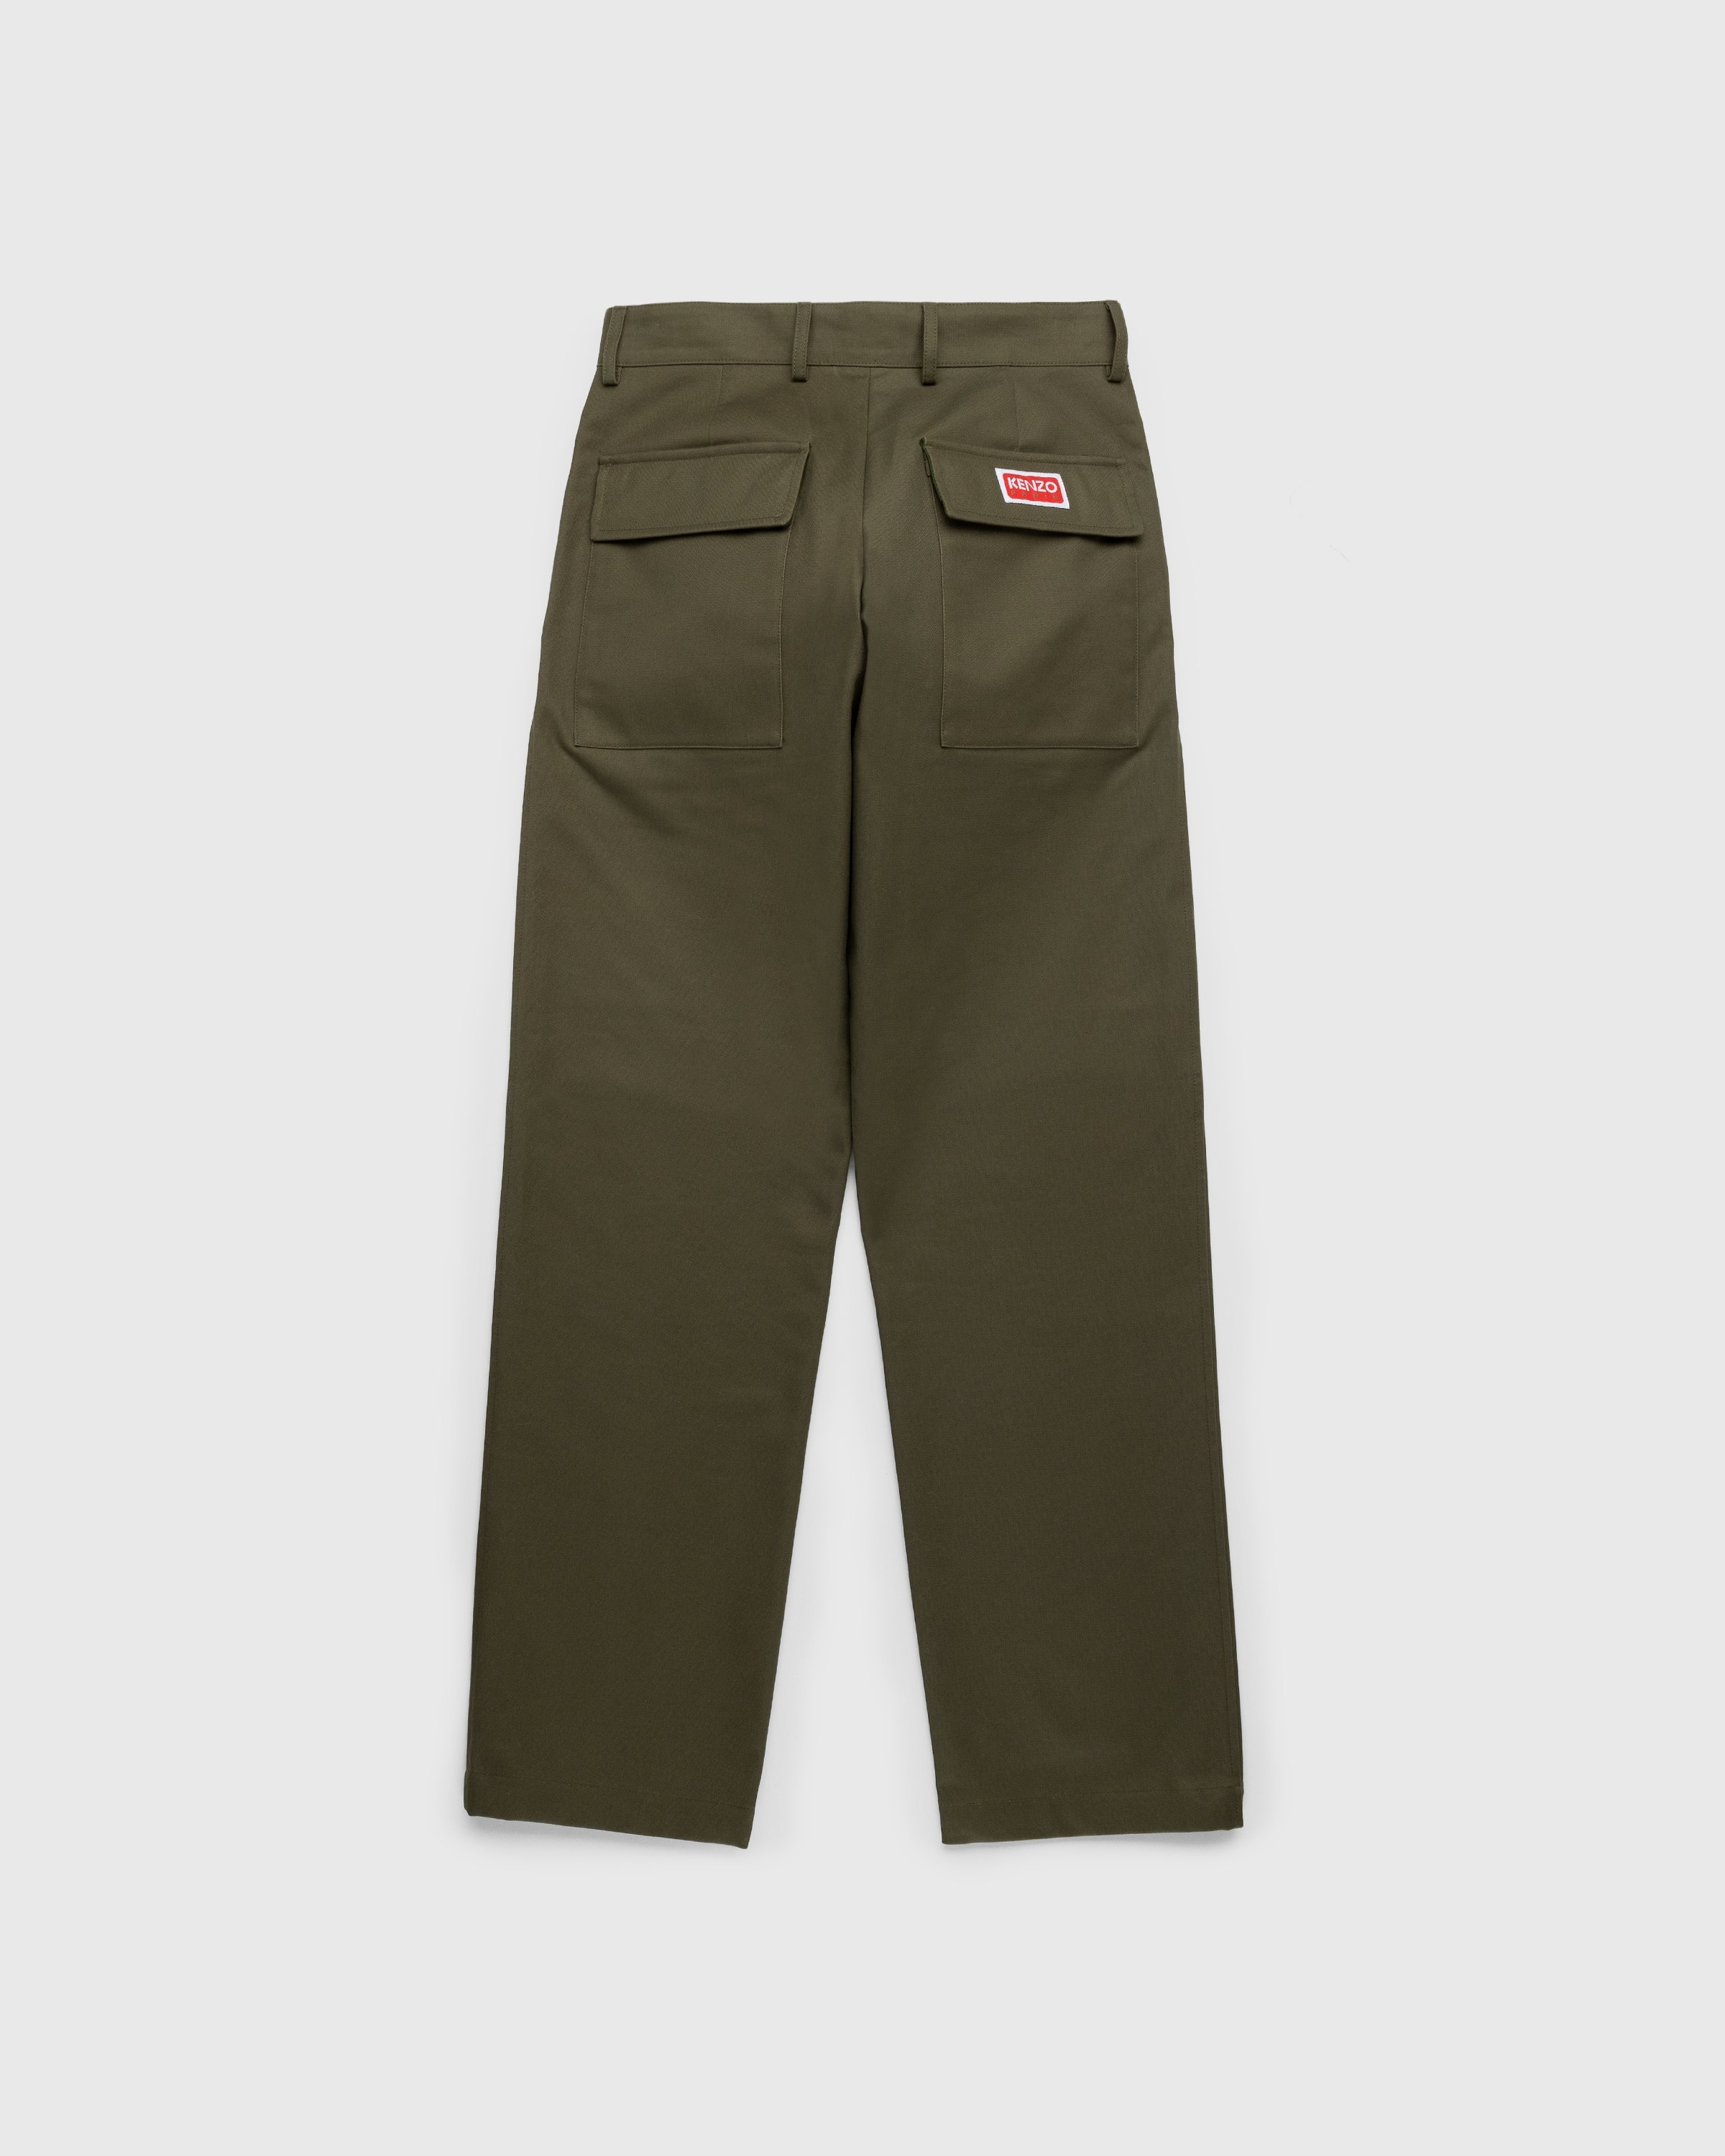 Kenzo – Tailored Pants Dark Khaki - Cargo Pants - Green - Image 2